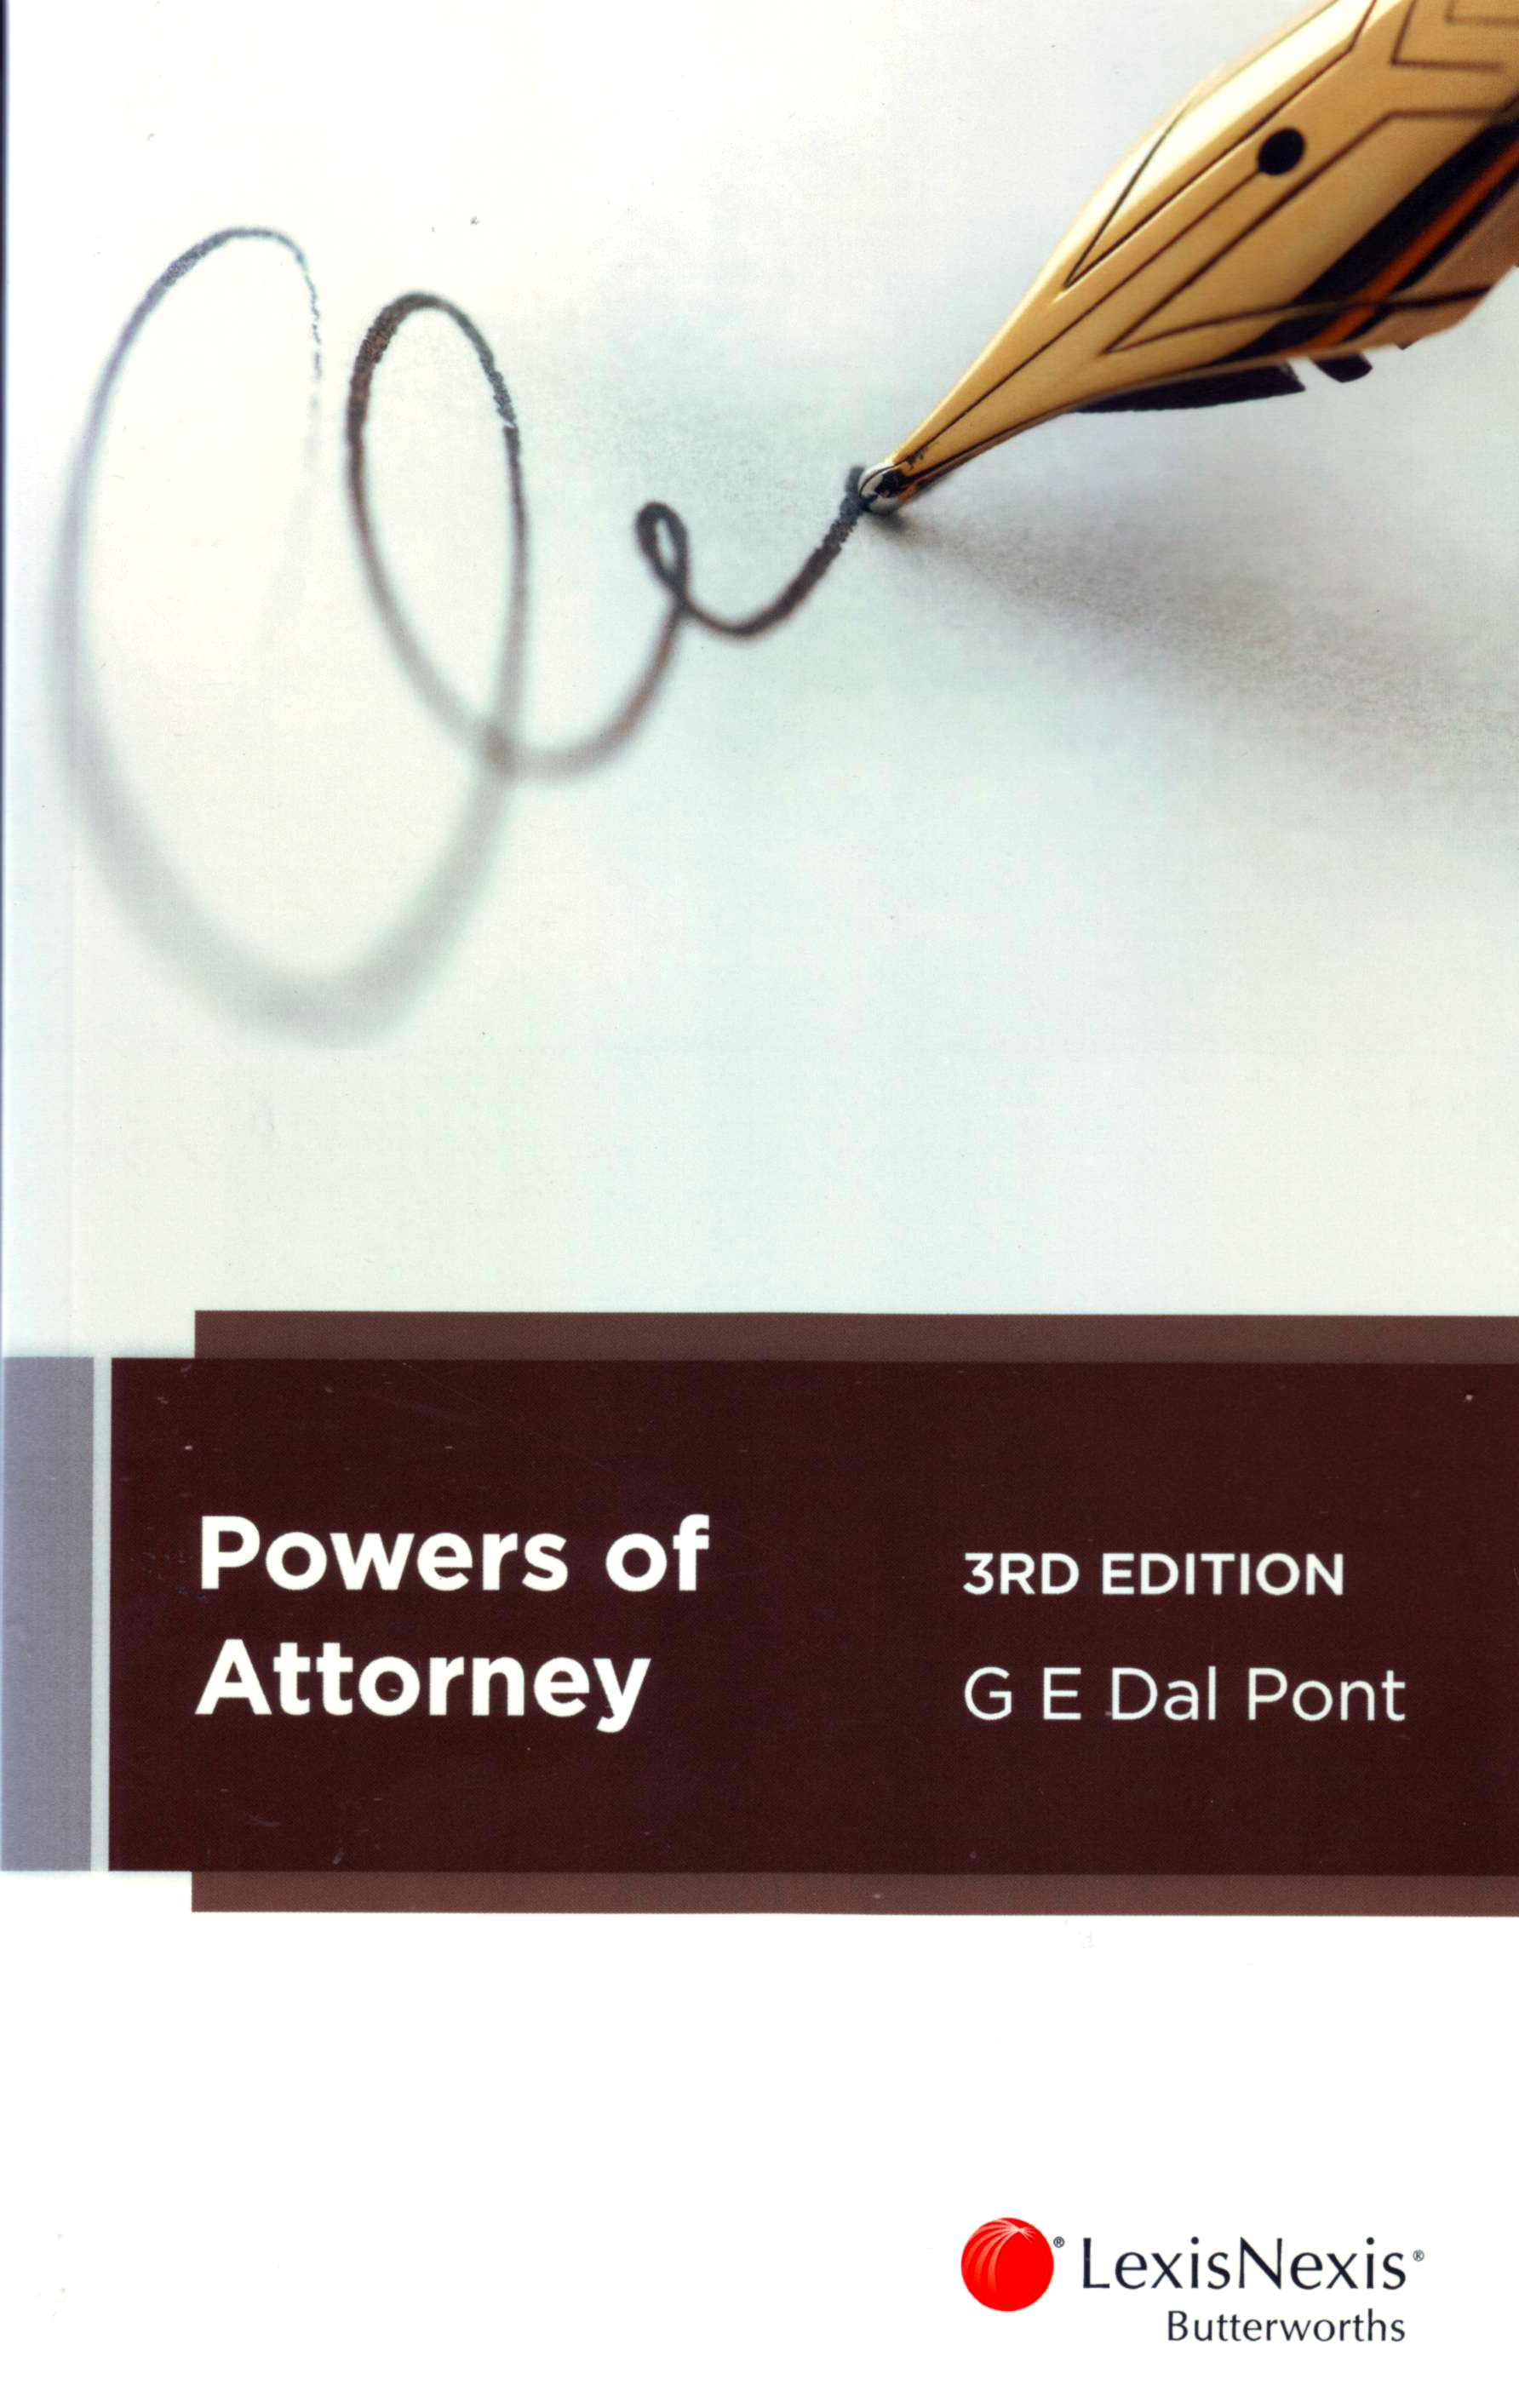 Powers of Attorney e3